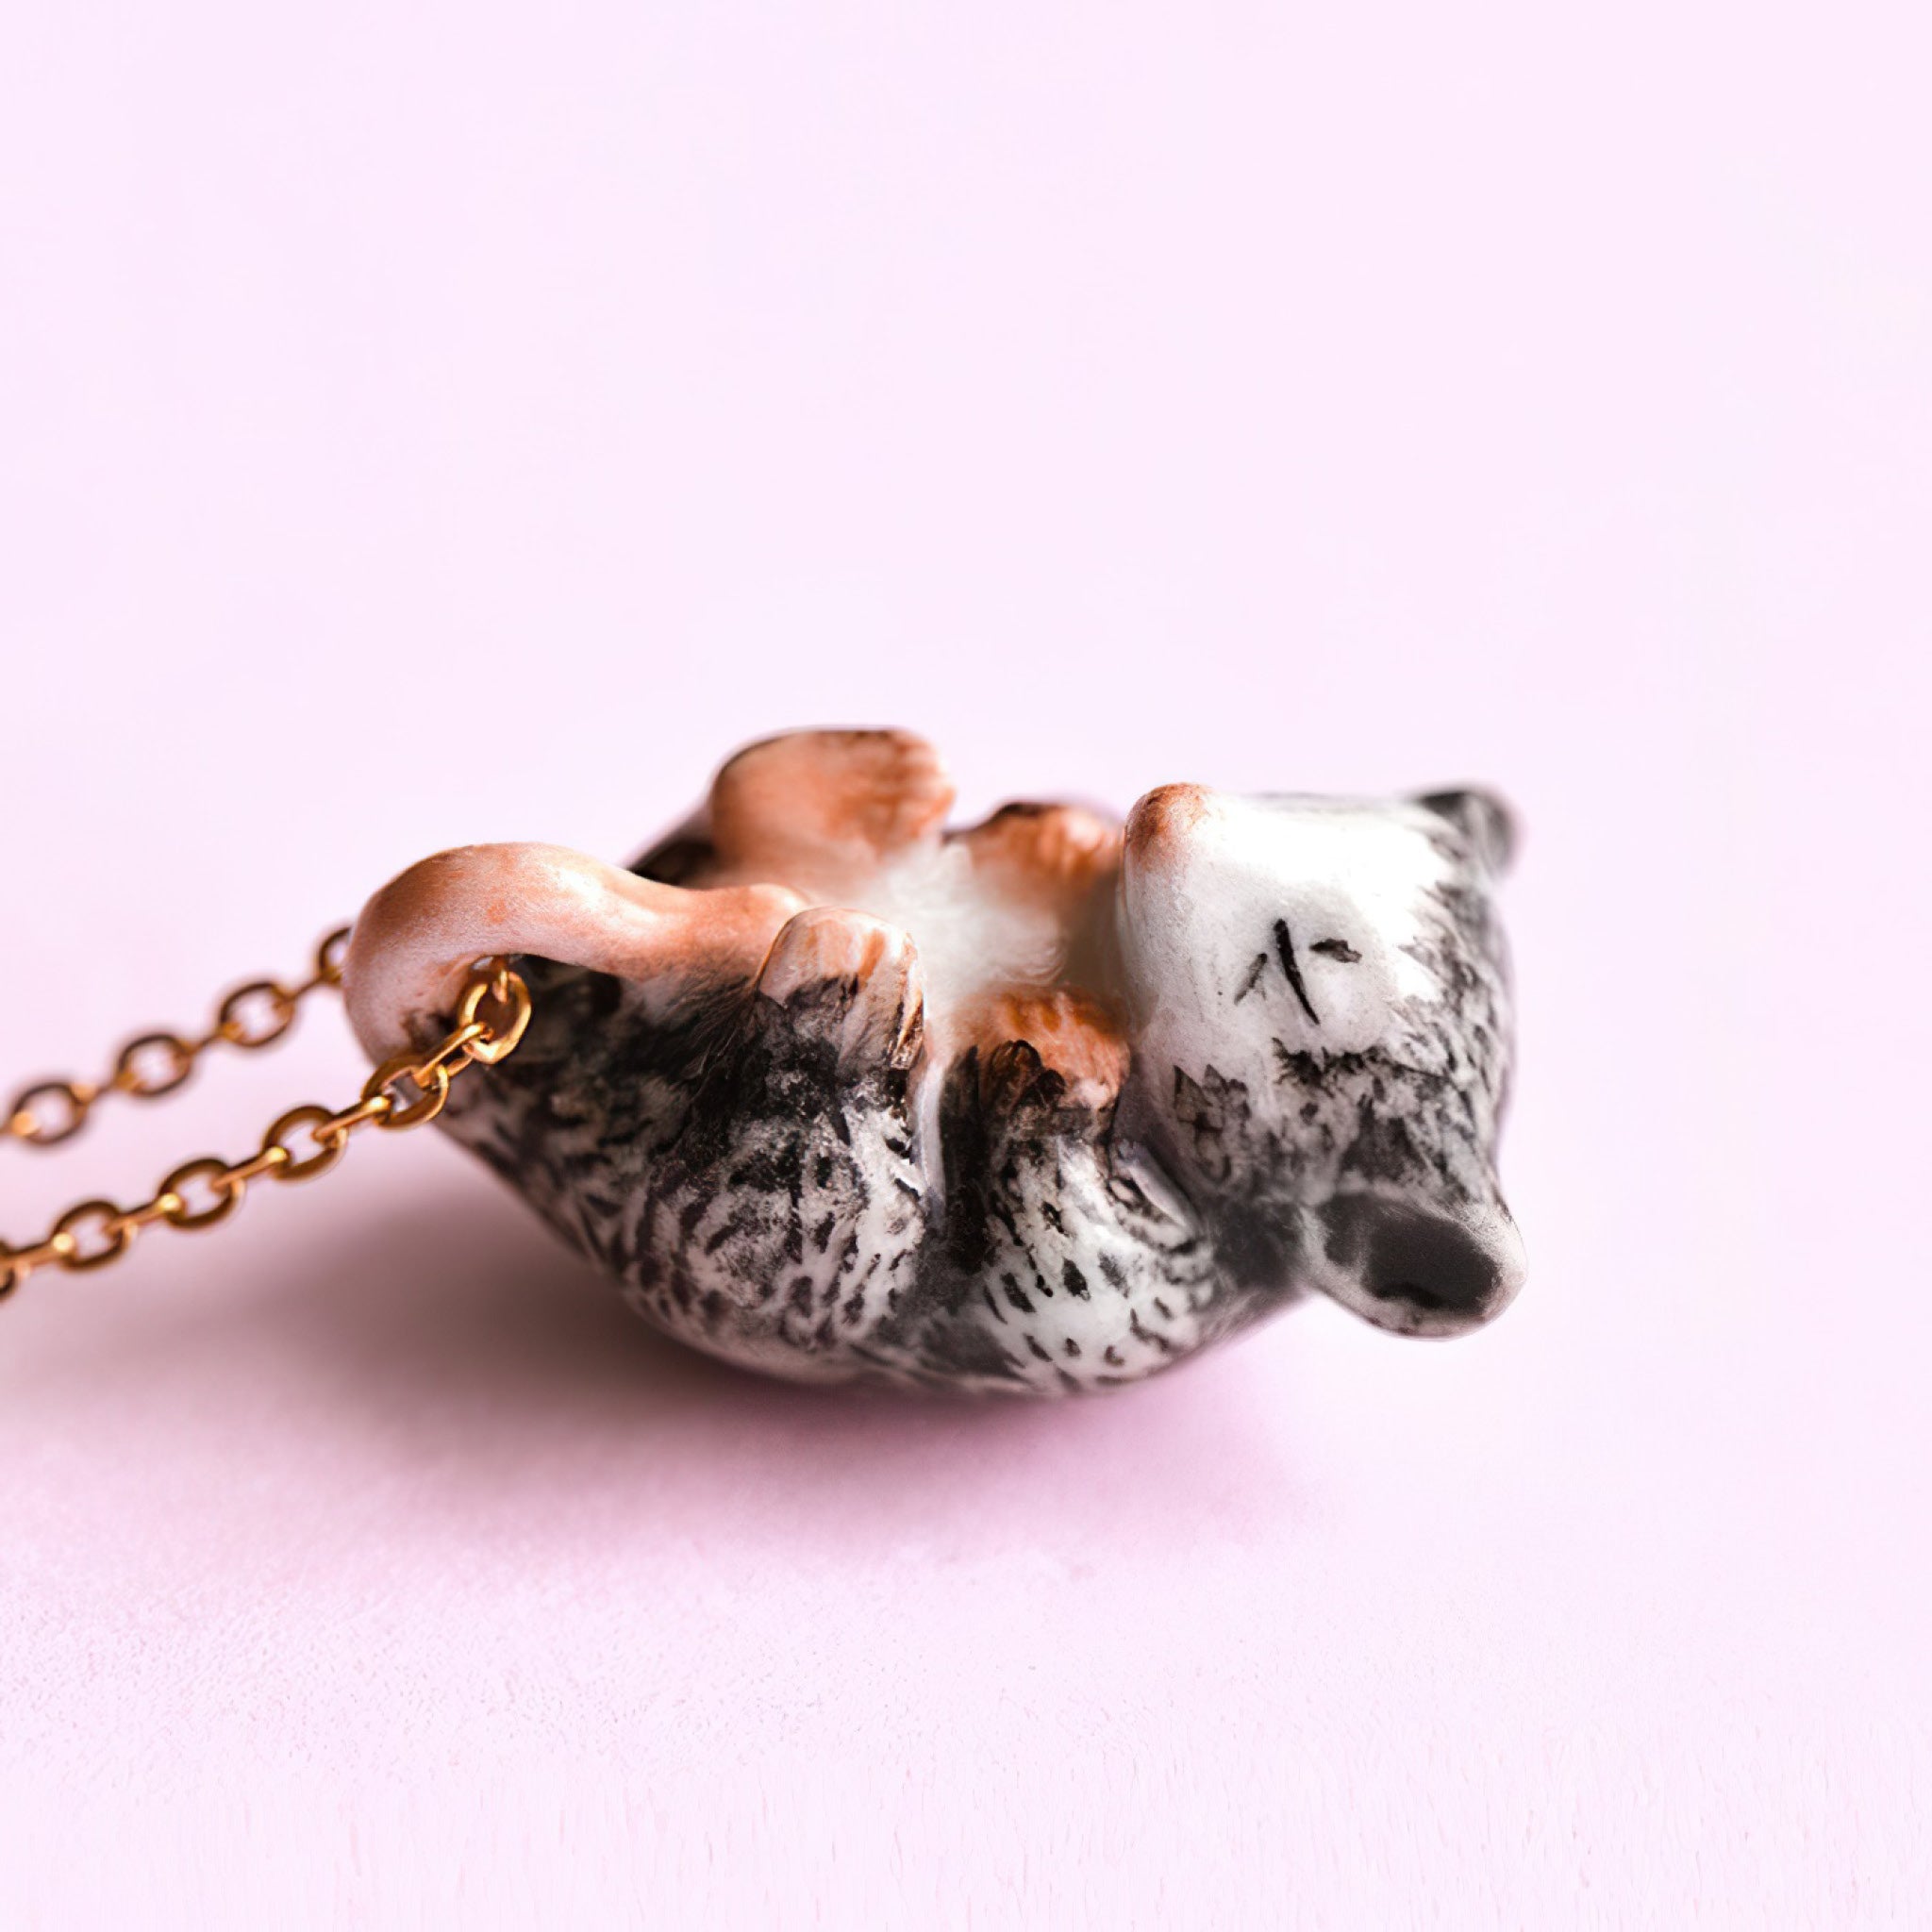 Possum Necklace | Camp Hollow Ceramic Animal Jewelry